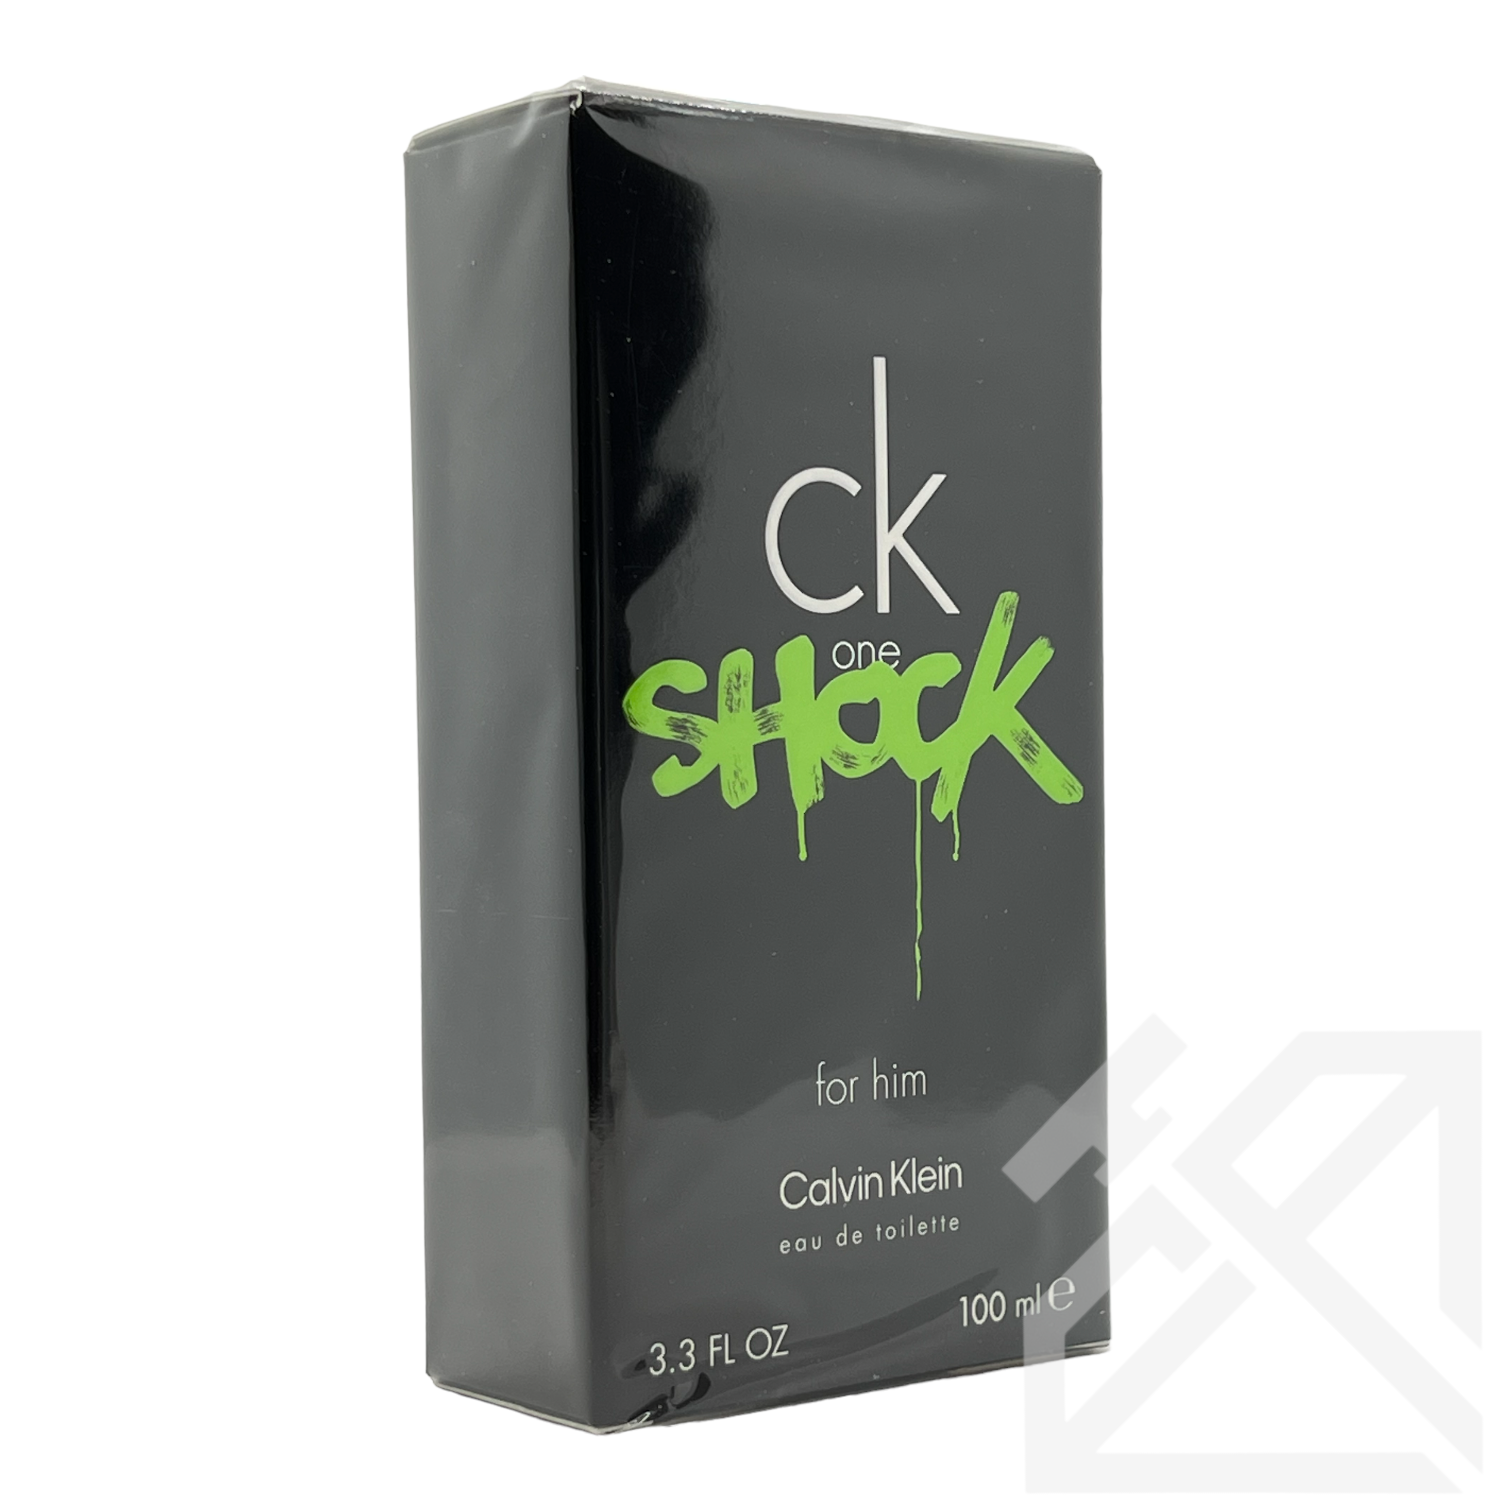 Fragrance SHOCK Toilette Klein Him – Calvin Addict Eau For ONE 100ml de spray CK